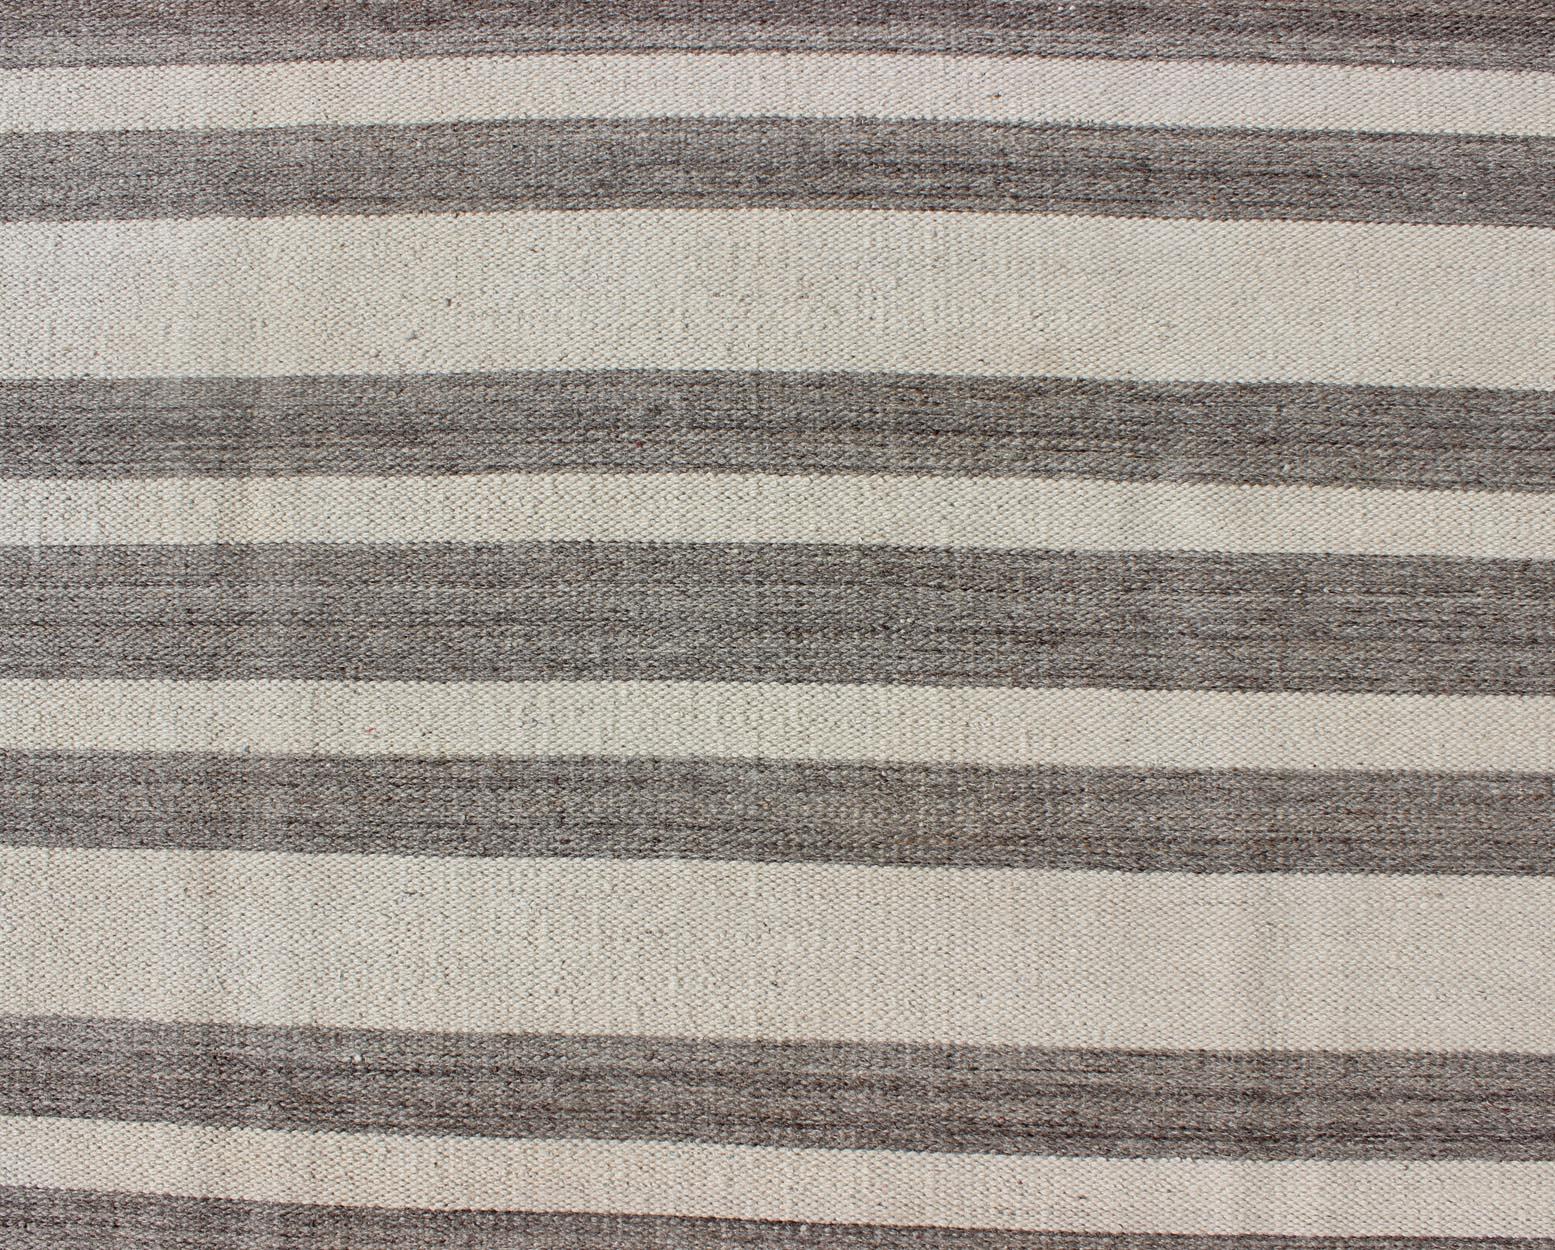 Hand-Woven Modern Striped Gray and Cream Kilim